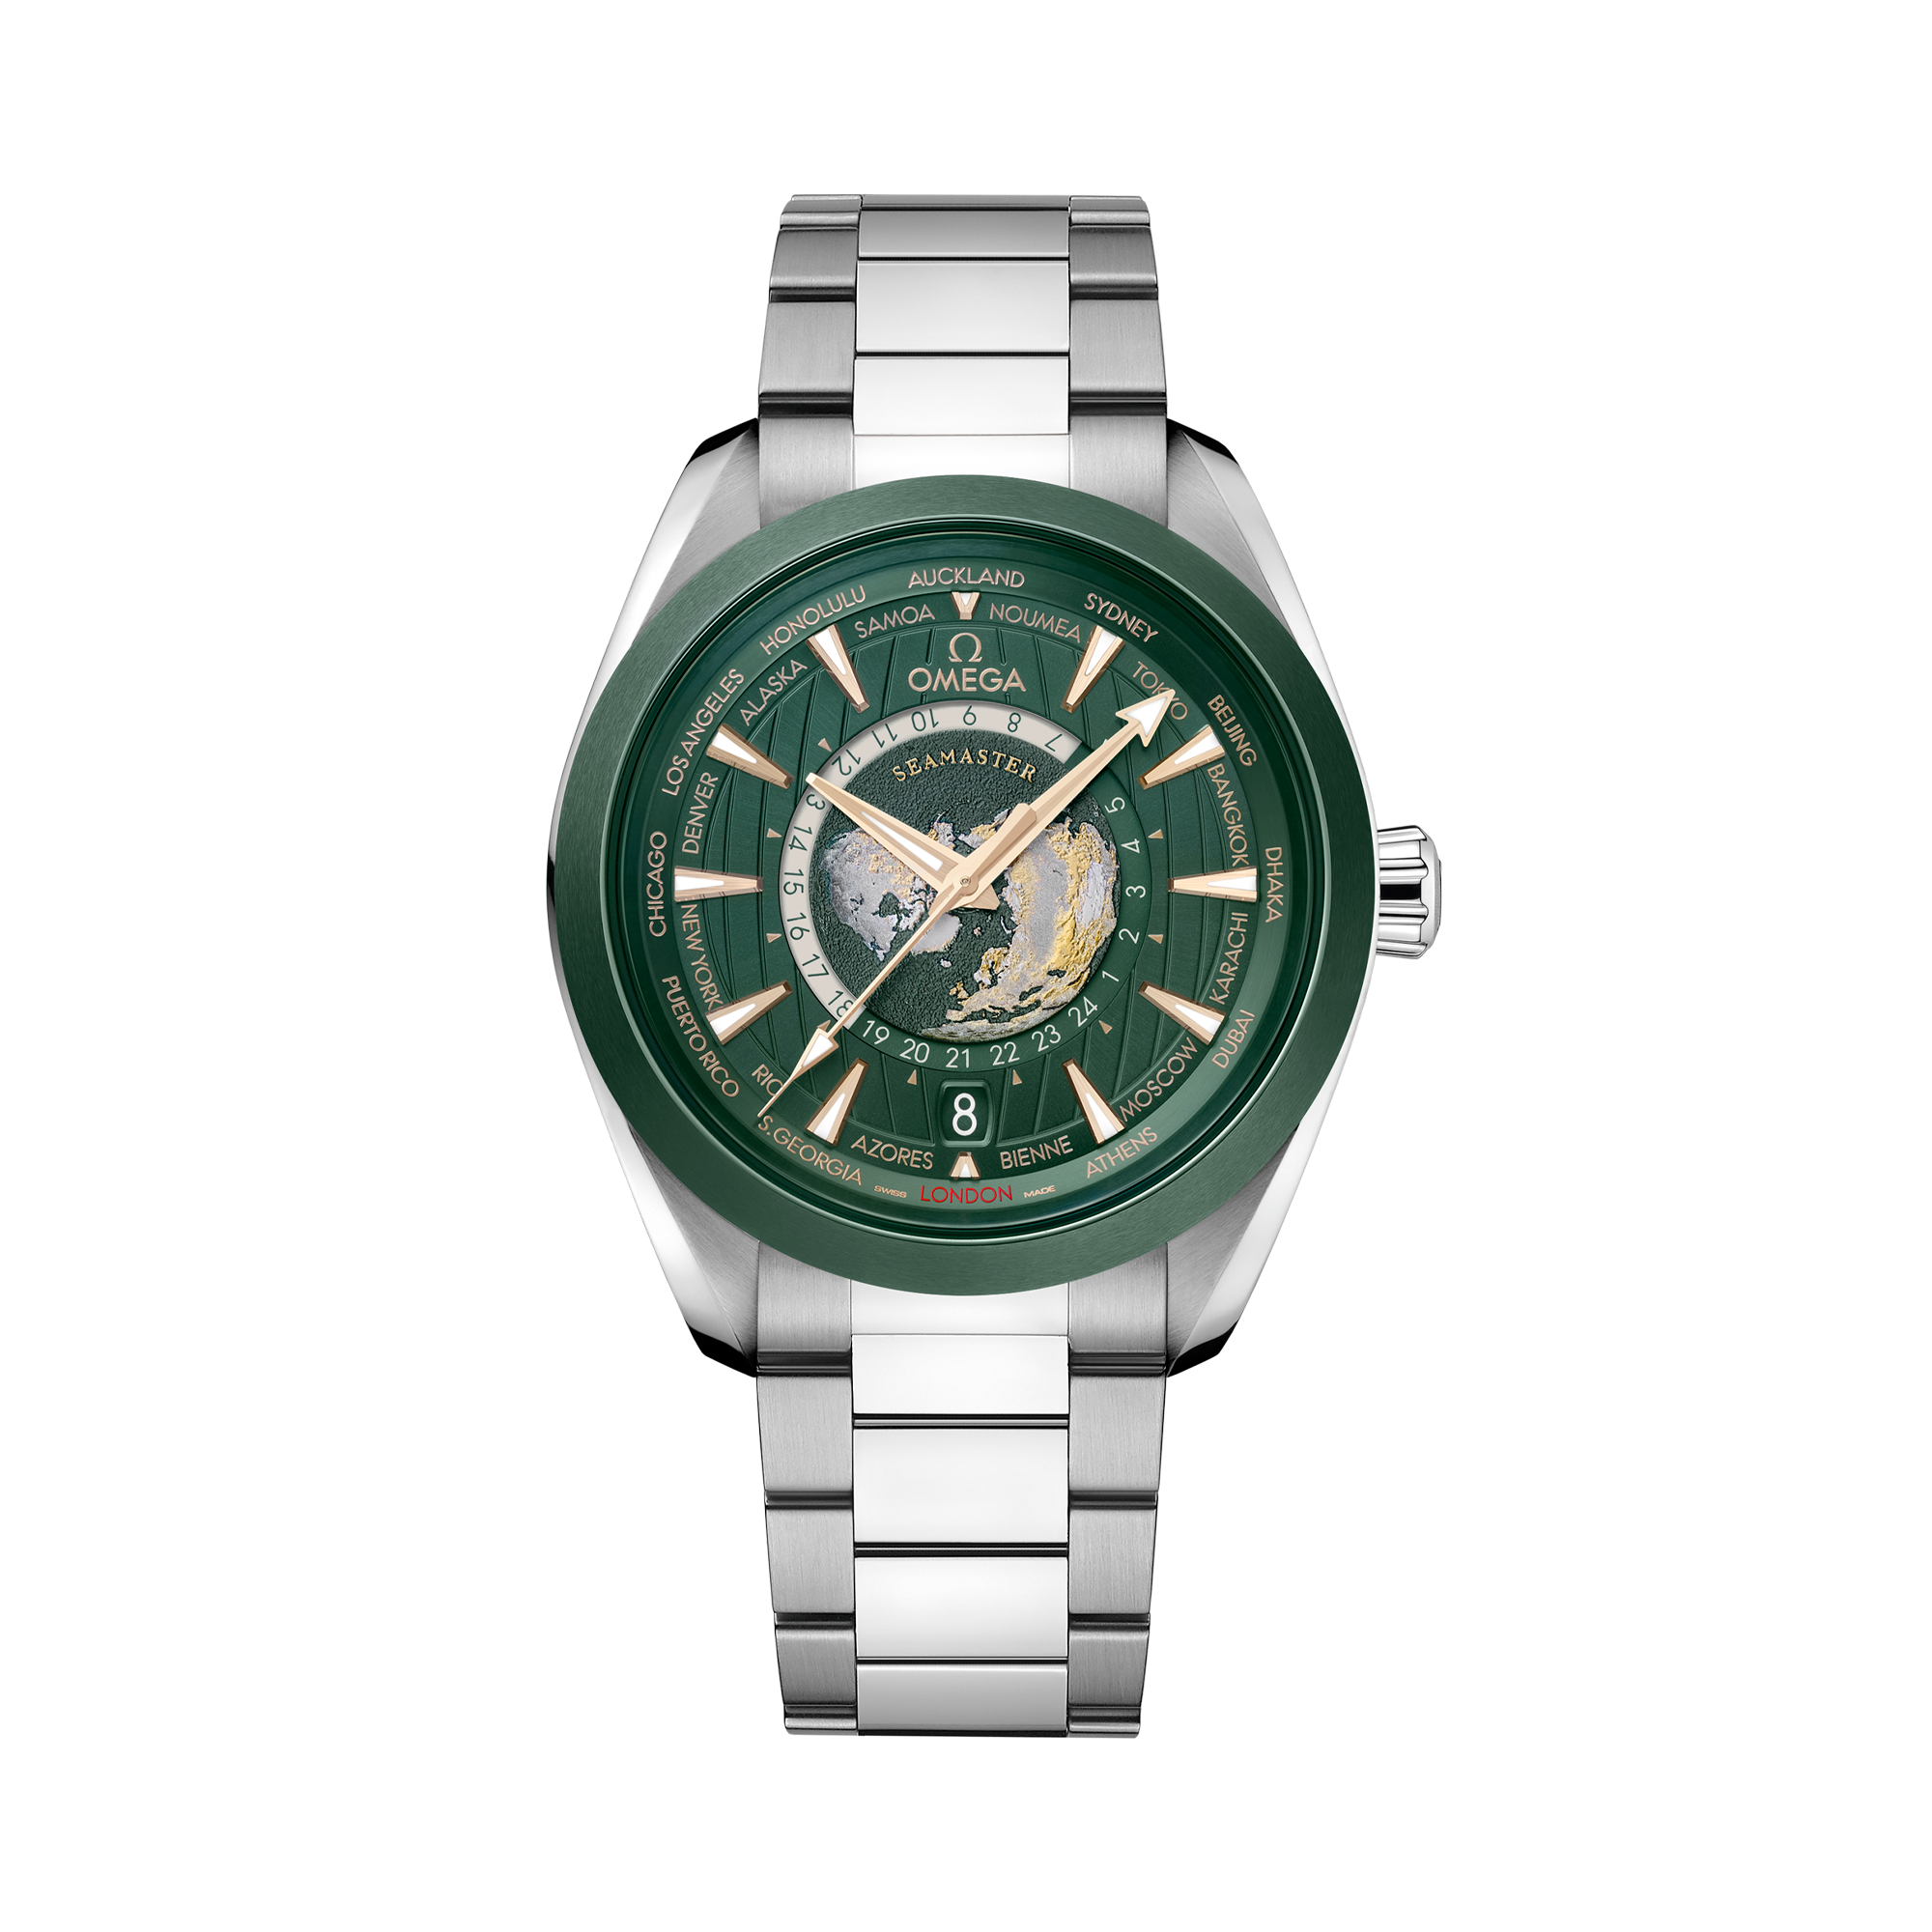 OMEGA Seamaster Aqua Terra Chronometer Gmt Worldtimer 43mm, Green Dial, Baton Numerals_1